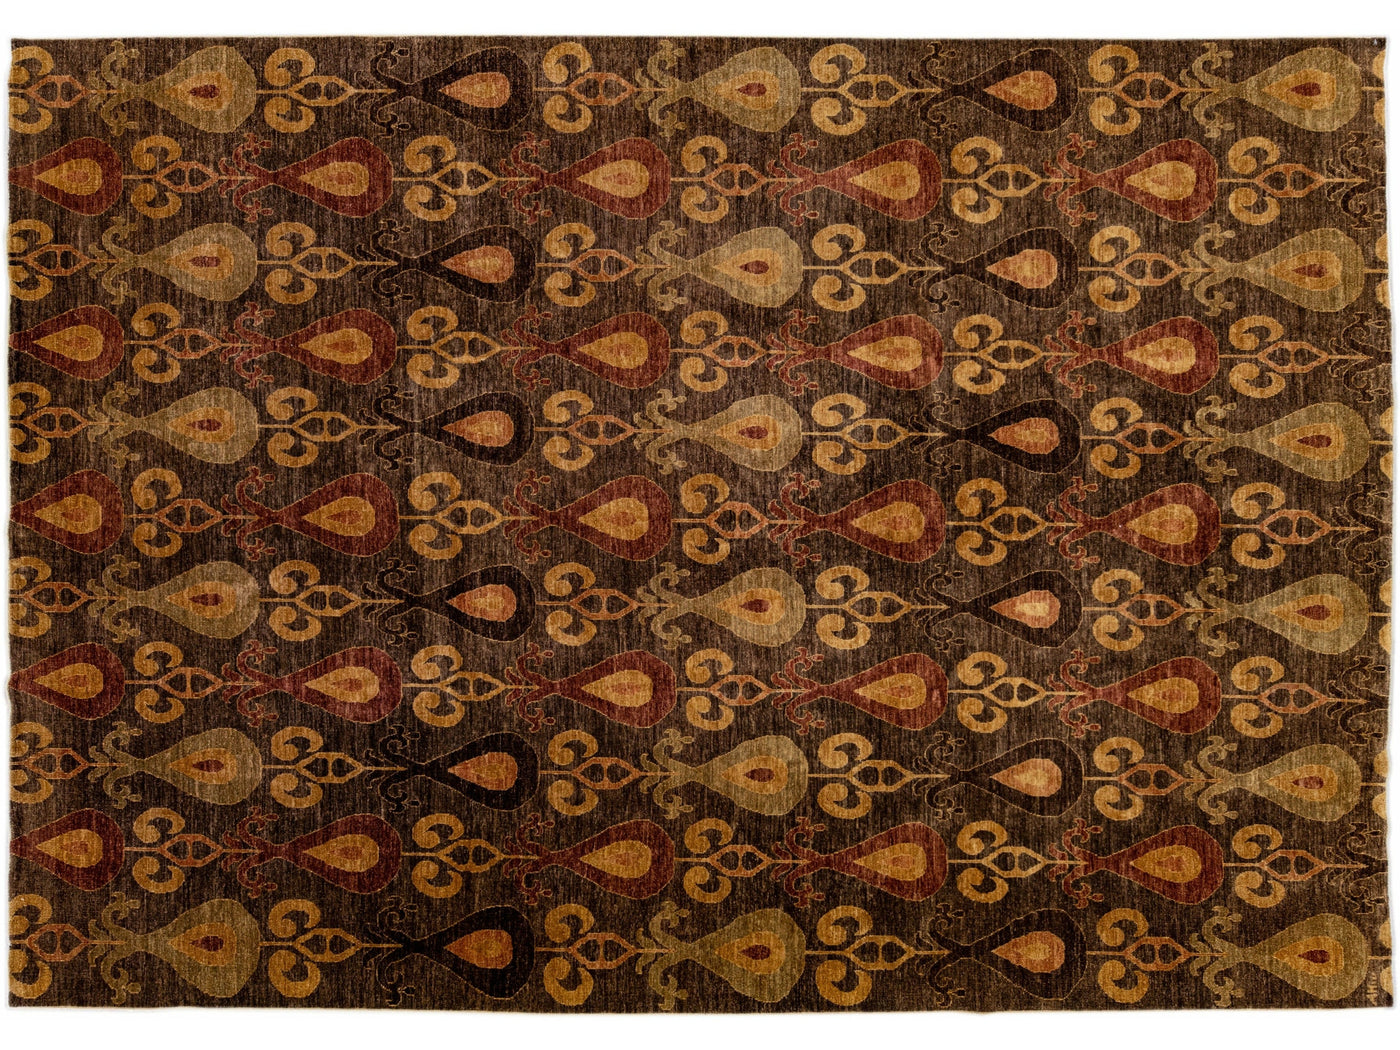 Brown Modern Ikat Handmade Geometric Pattern Designed Wool Rug